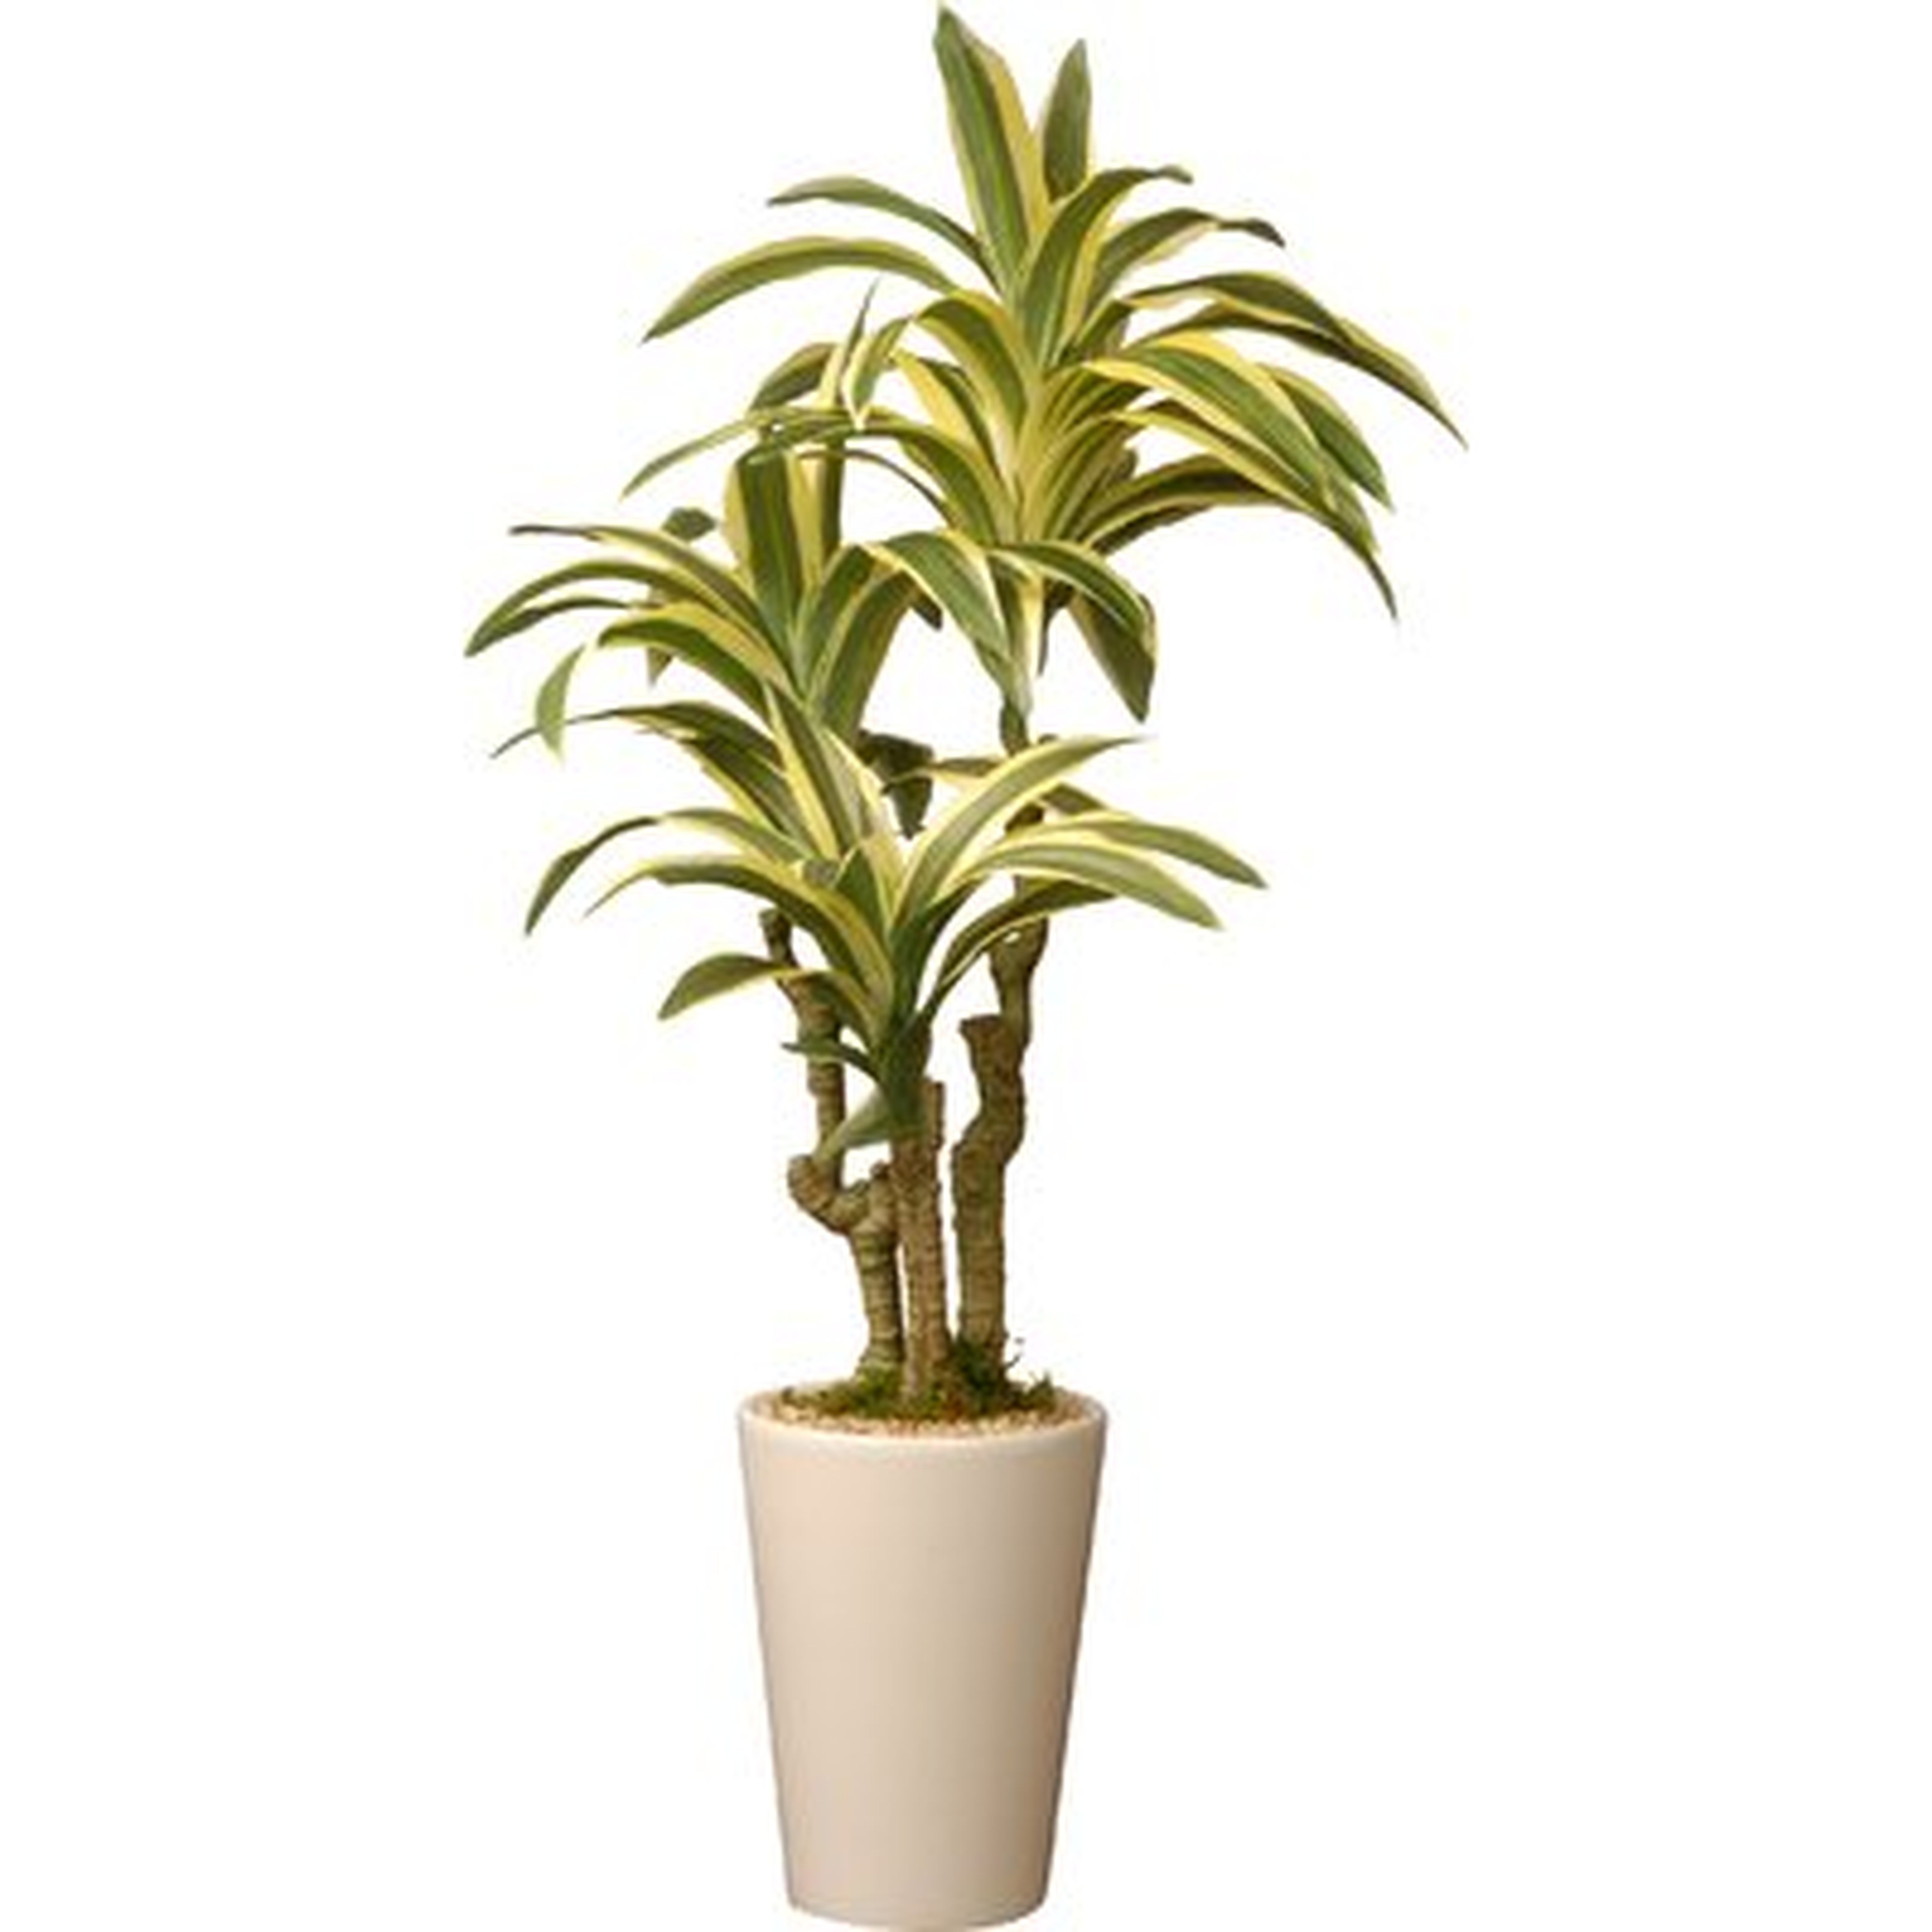 Dracaena Palm Plant in Pot - Wayfair